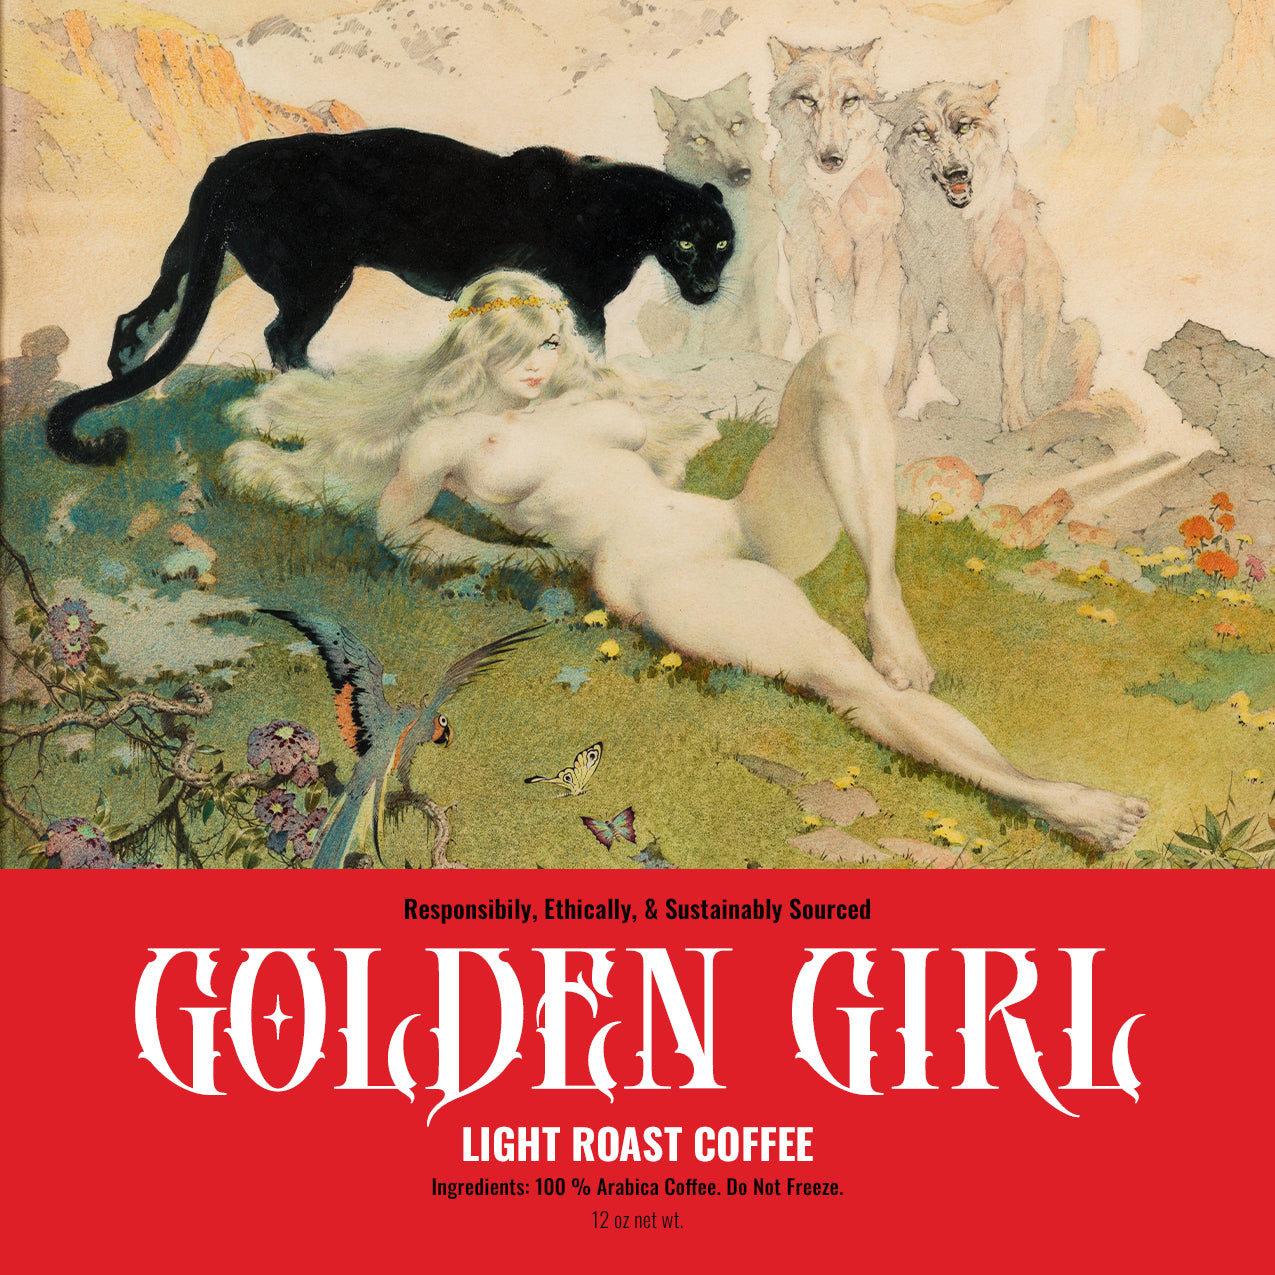 Golden Girl: Light Roast Coffee